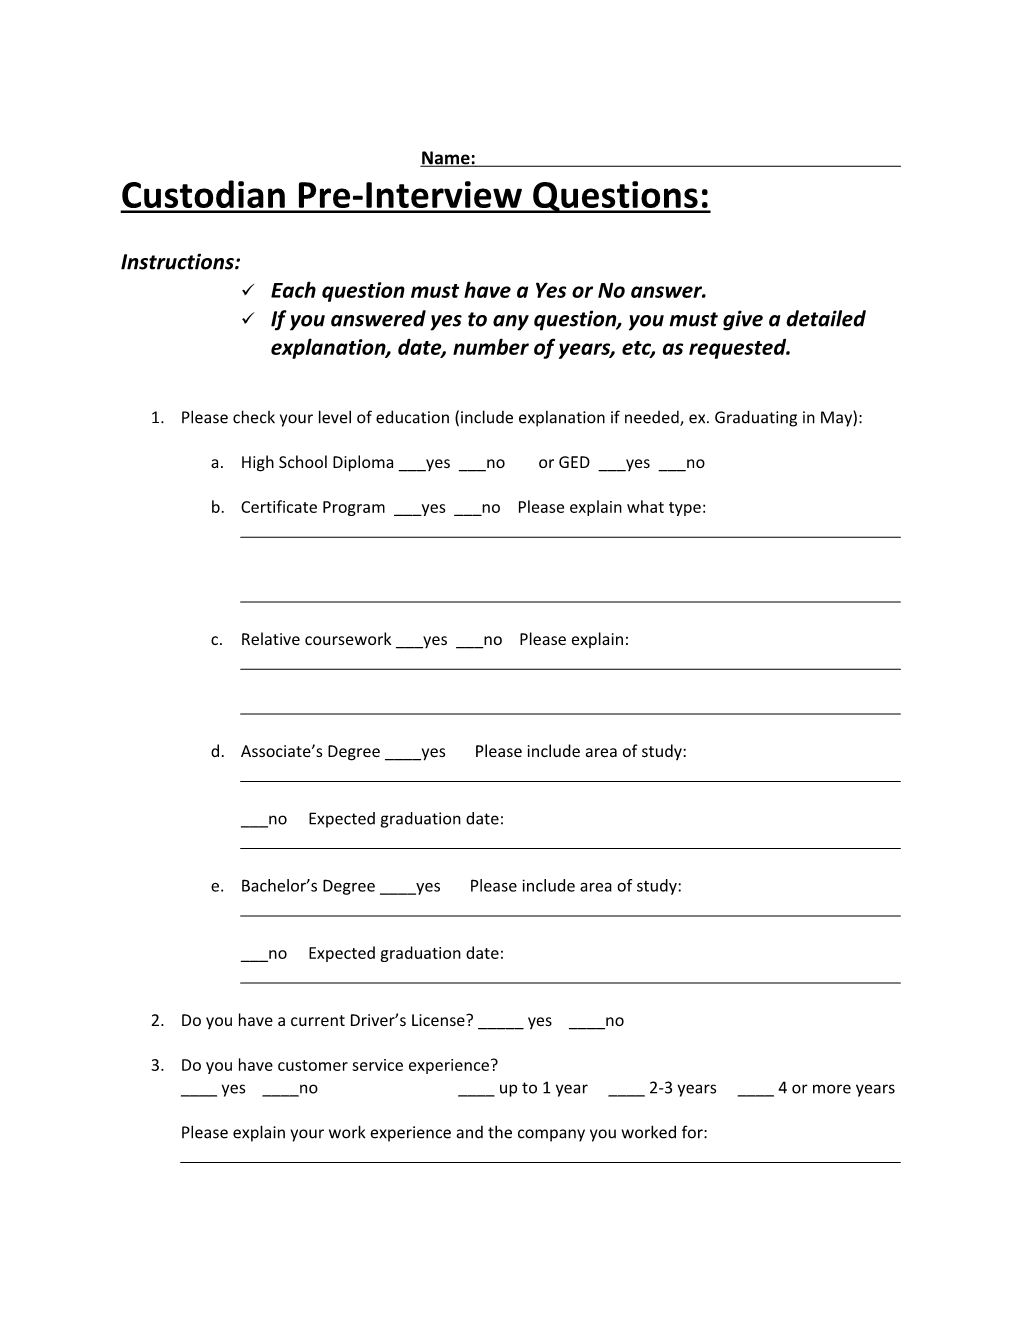 Custodian Pre-Interview Questions